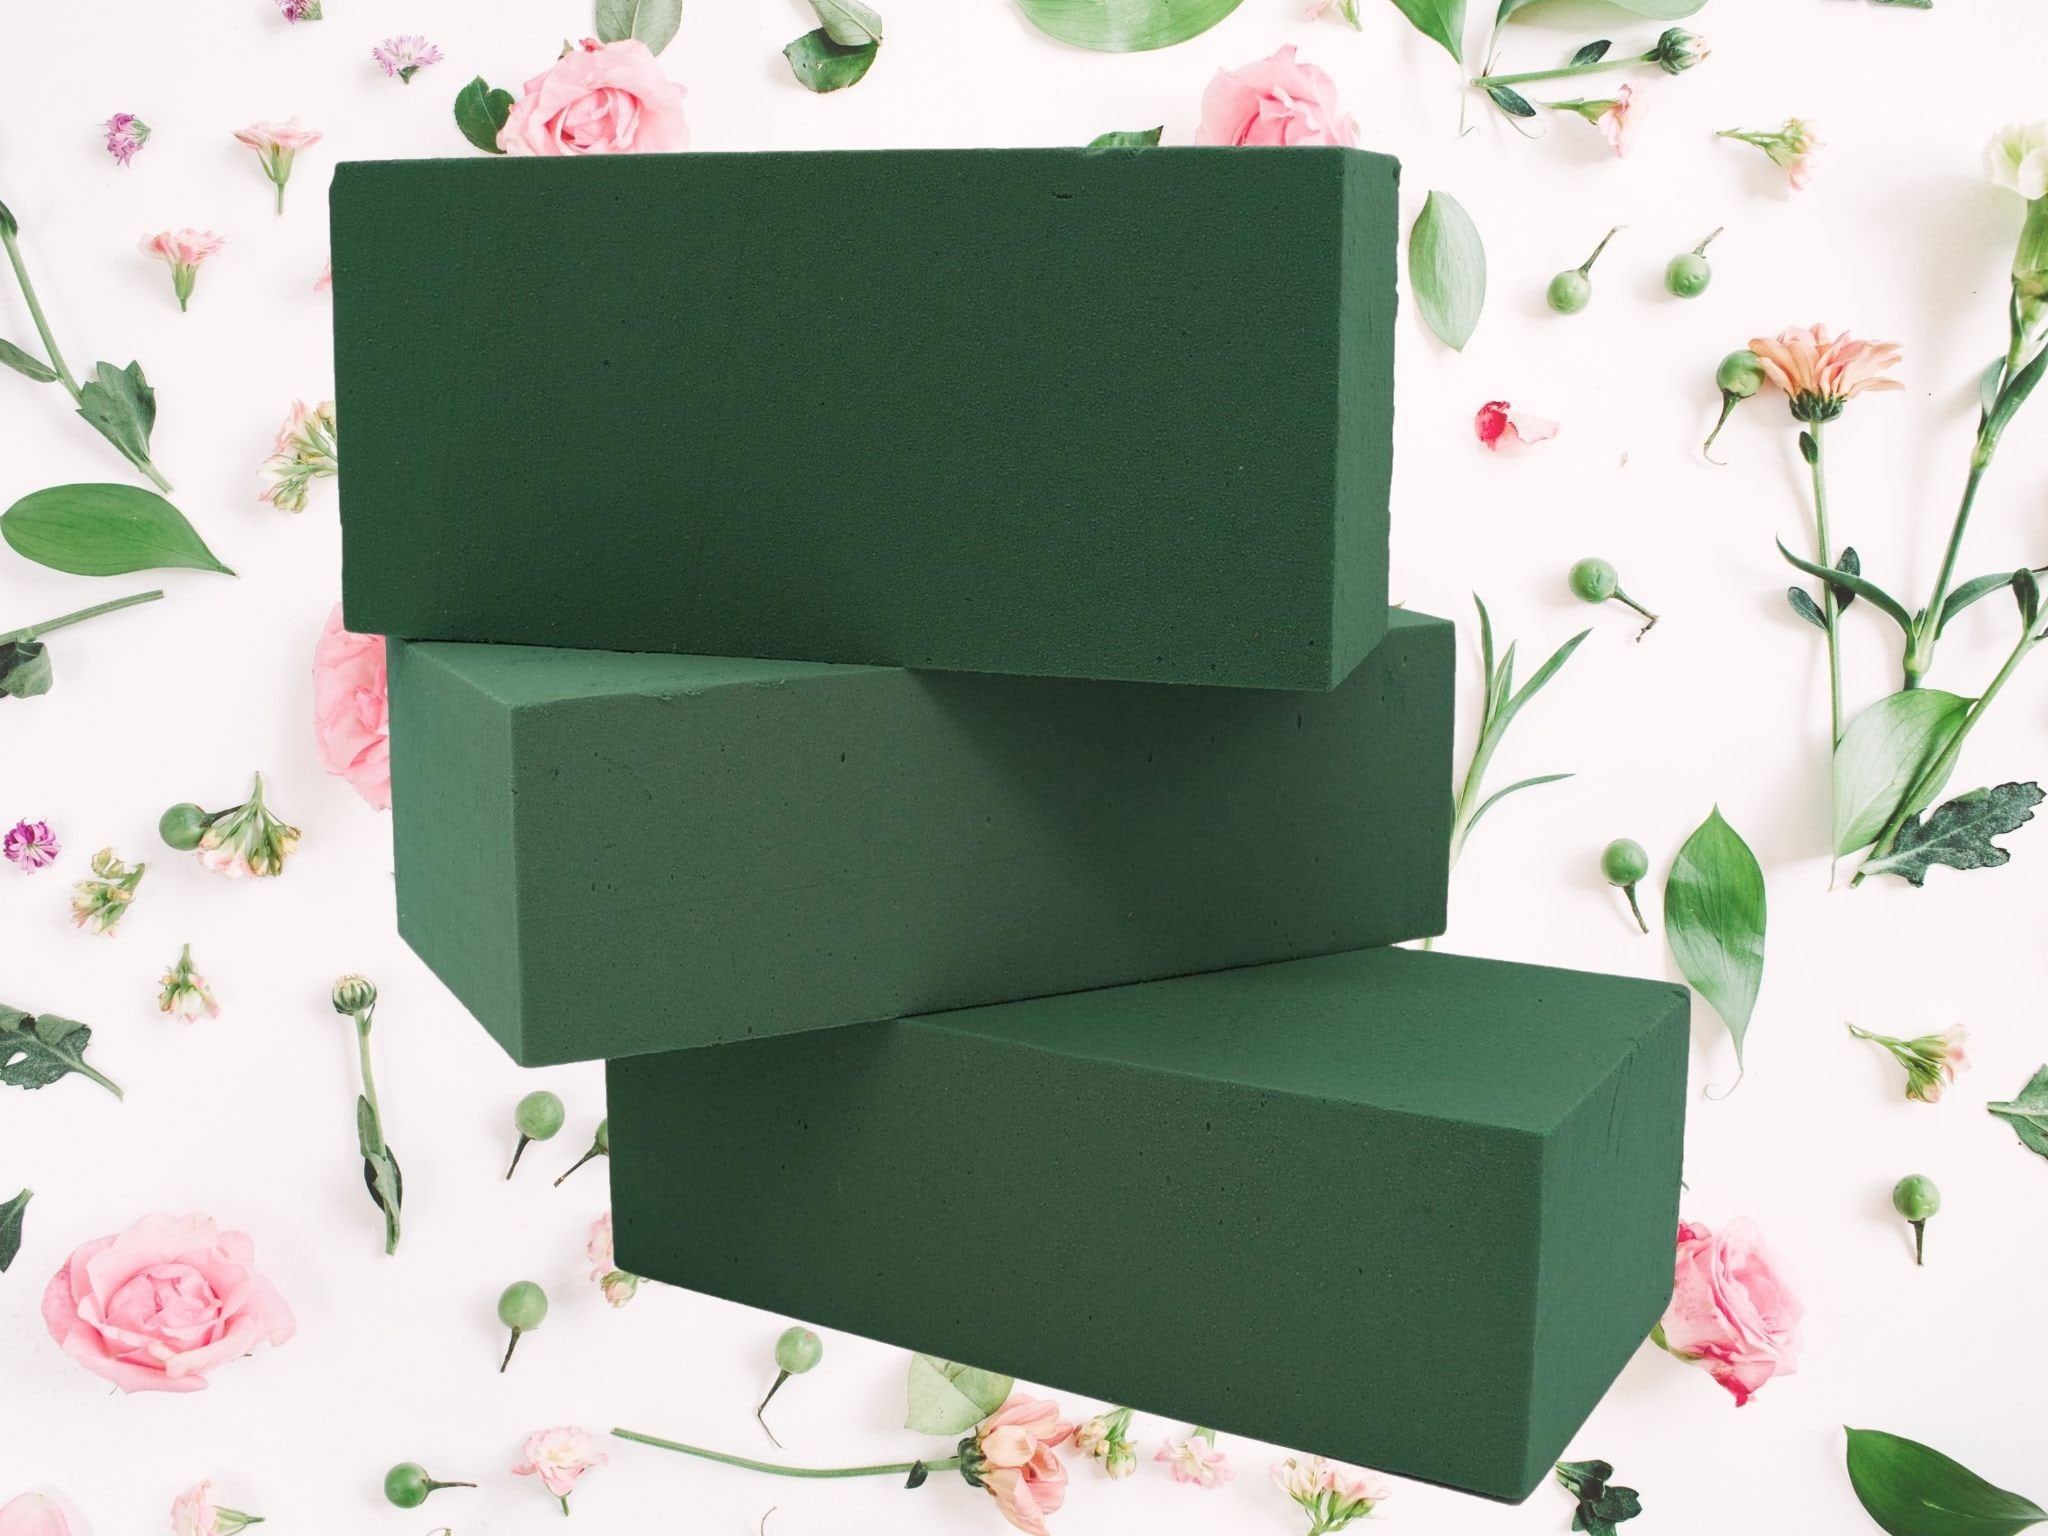 Floral Foam, 15 PCS Round Dry Floral Foam Blocks, Green Blocks for  Artificial Flowers, Great for Flower - AliExpress